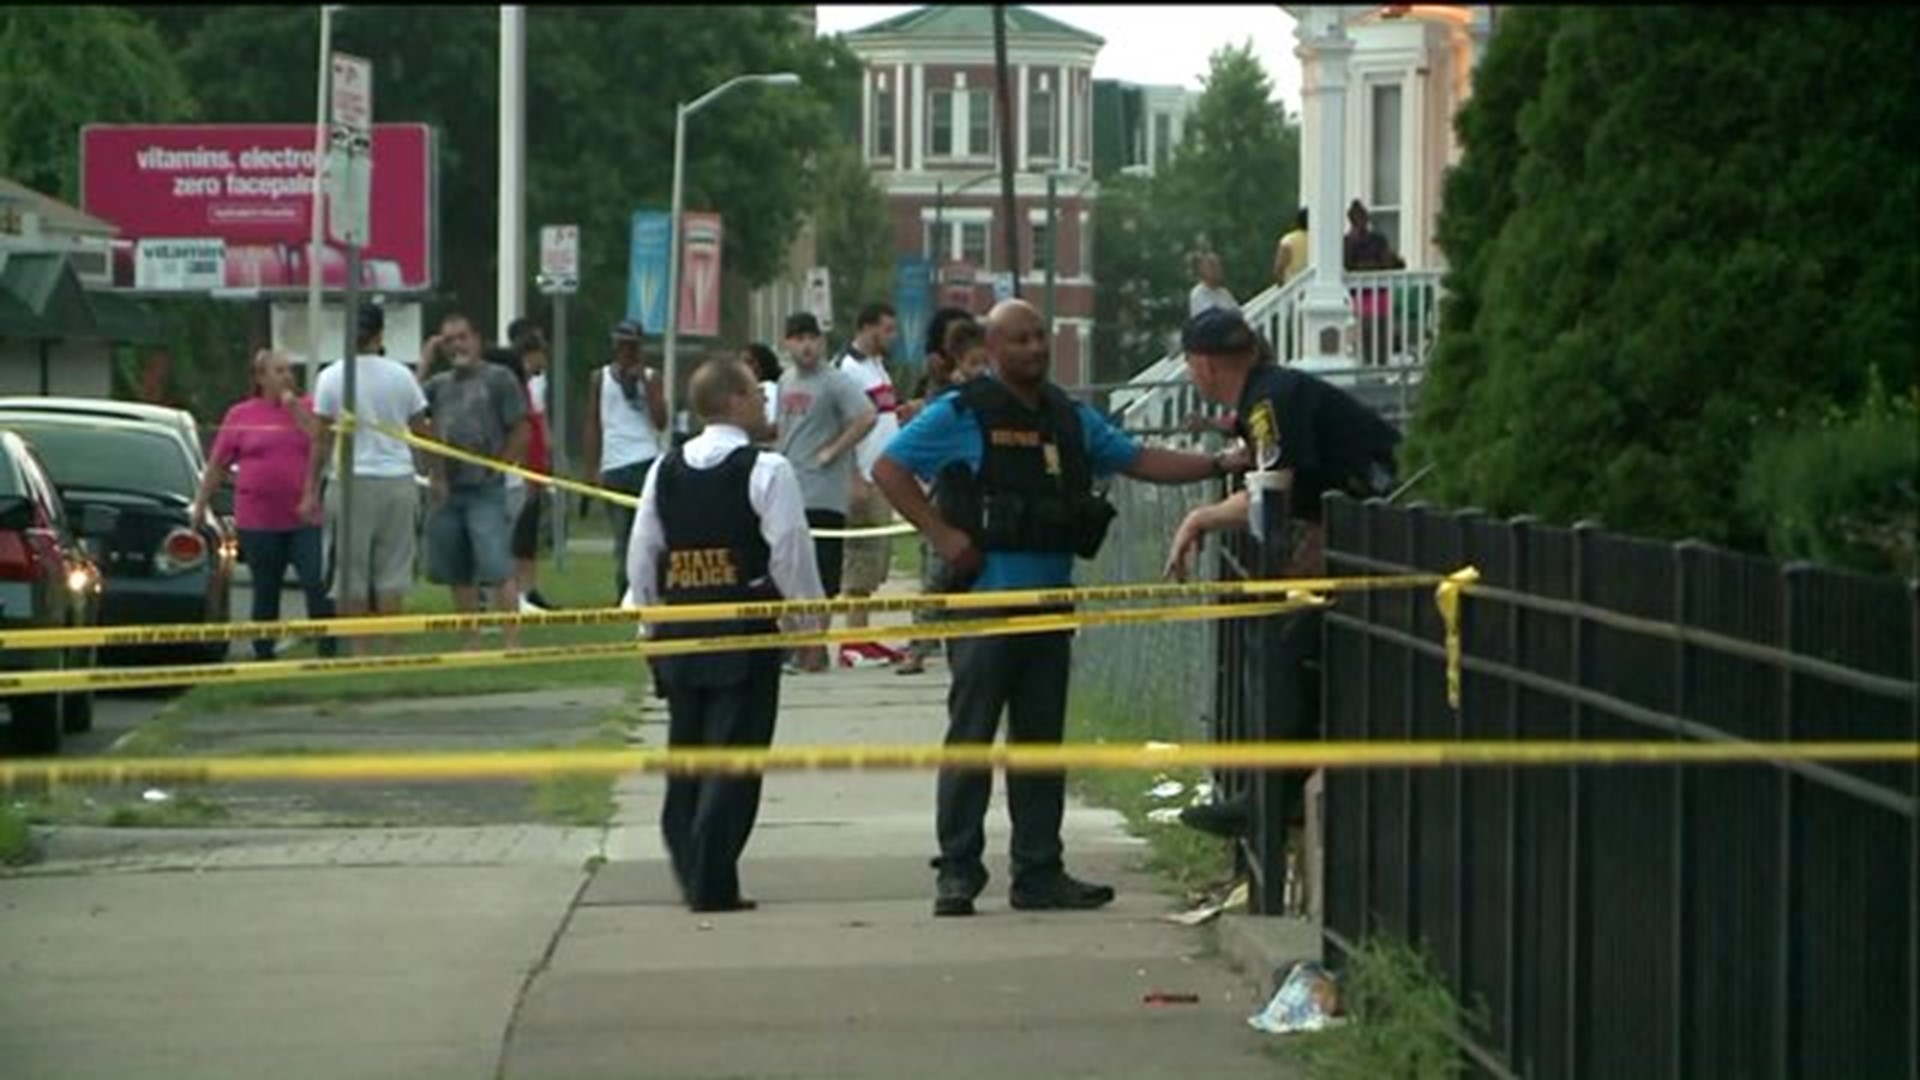 State helping curb Hartford violence